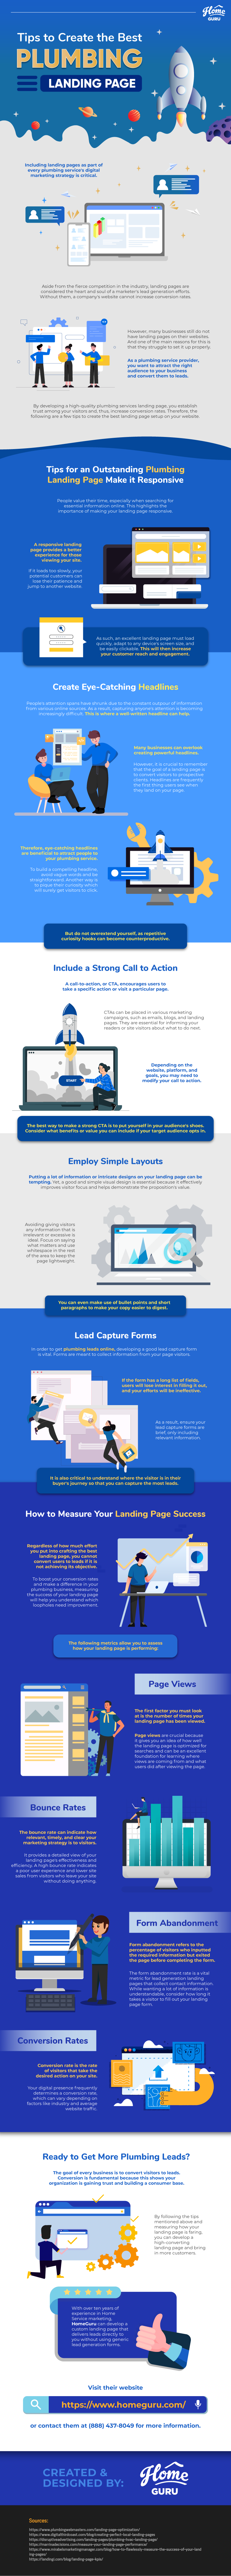 Tips-to-Create-the-Best-Plumbing-Lead-Landing-Page-Homeguru-Infographic